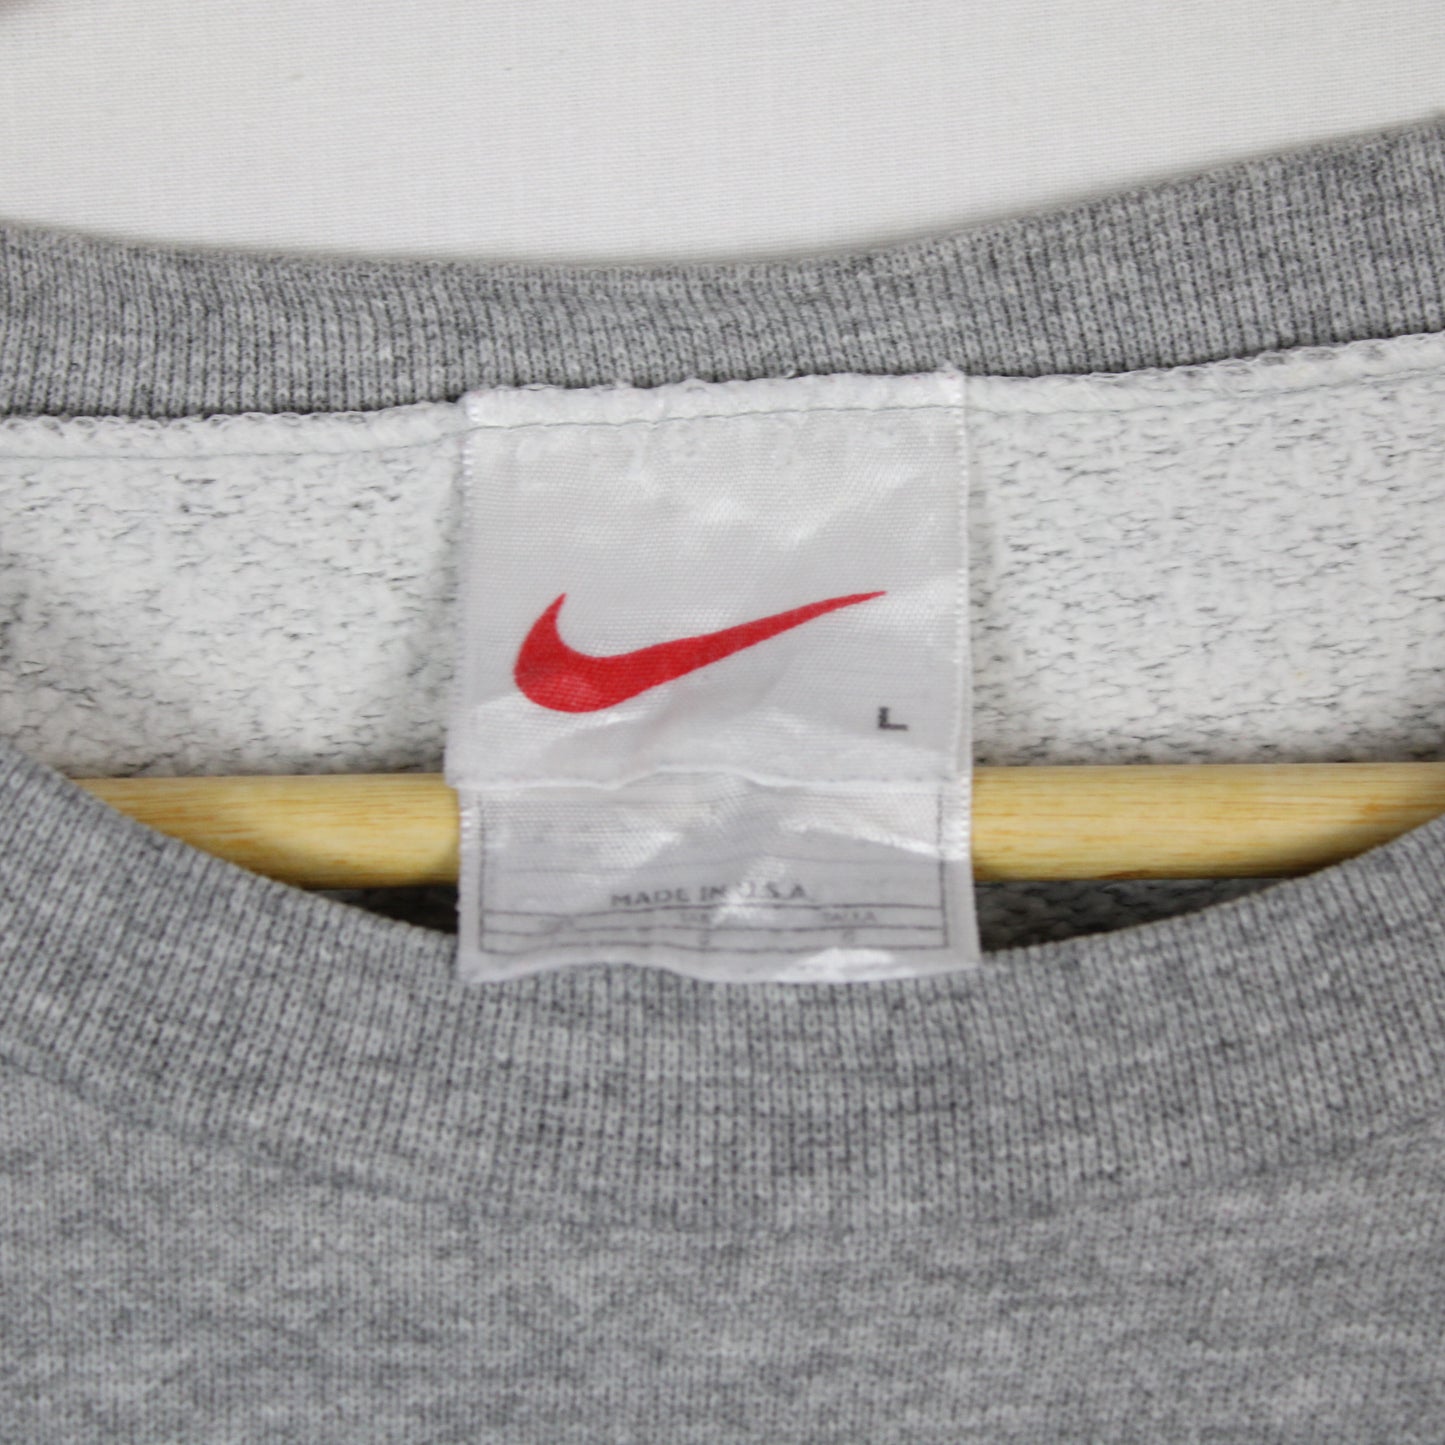 Vintage Nike Spellout Sweatshirt - S